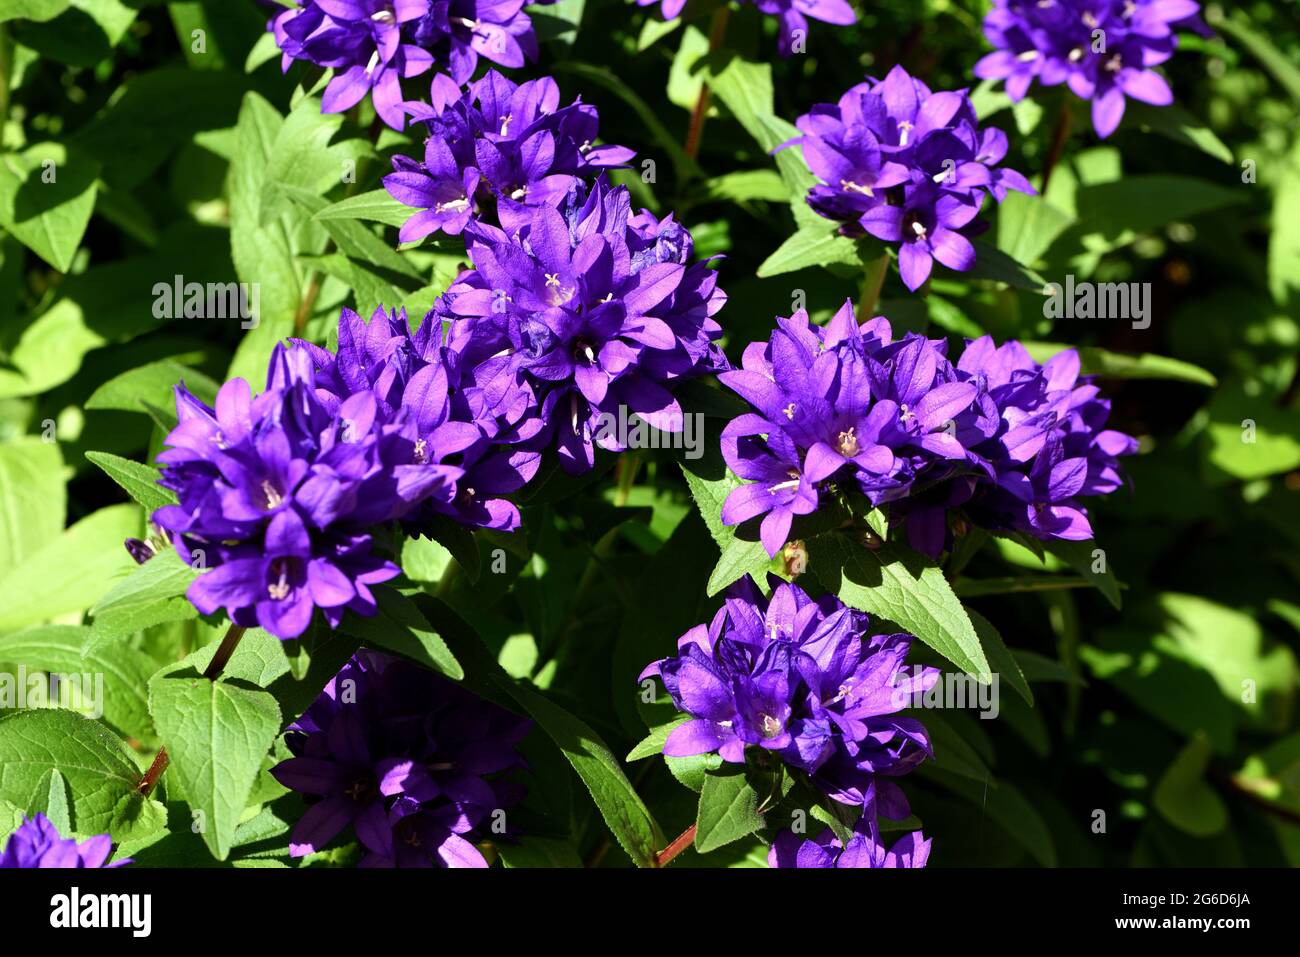 A cluster of purple flower heads of Campanula Glomerata. Stock Photo